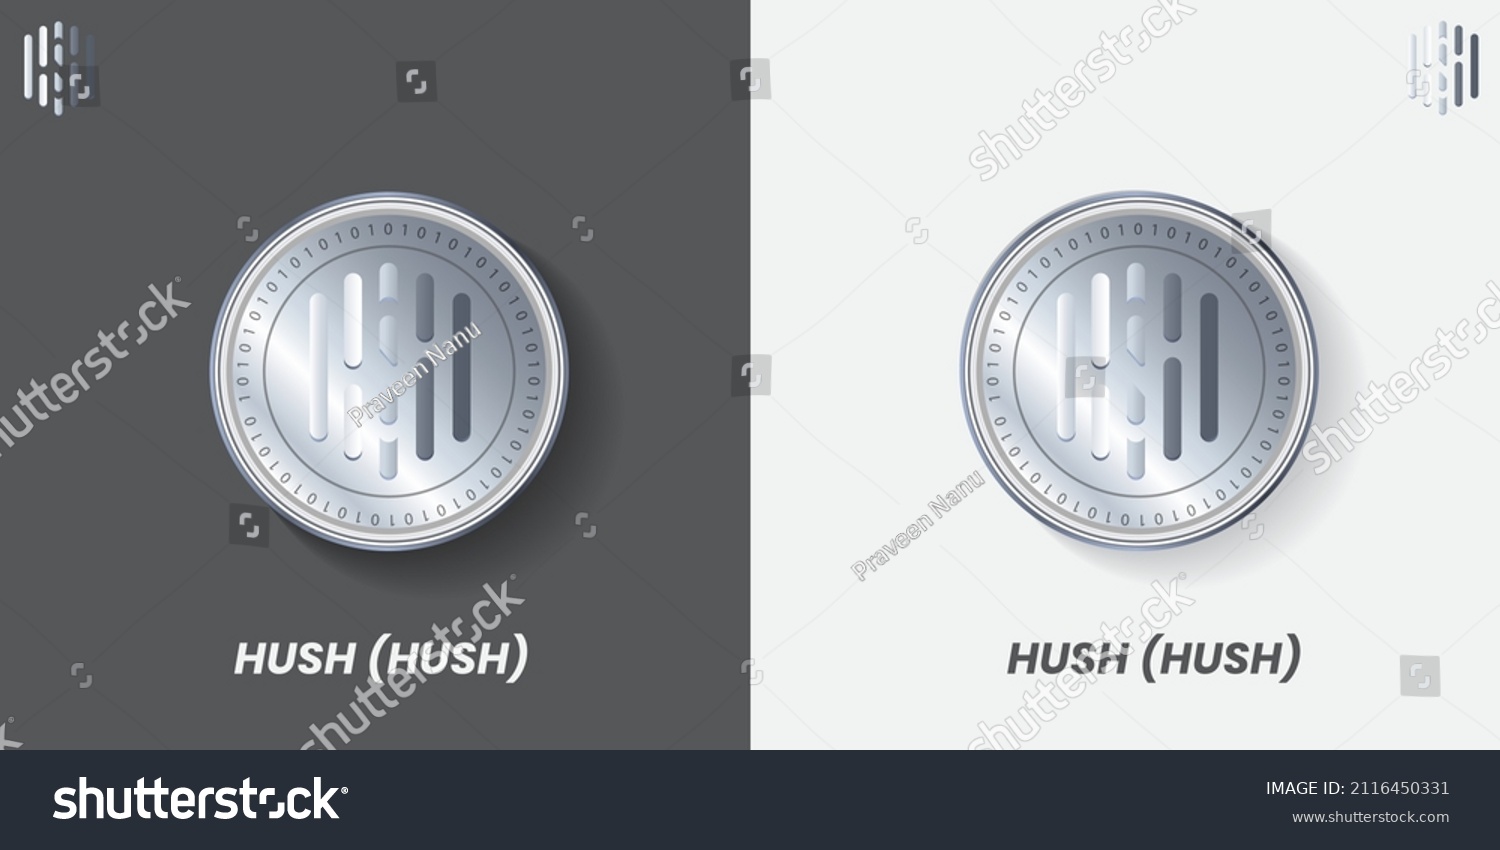 Hush coin cryptocurrency buy cryptocurrency tradestatikon